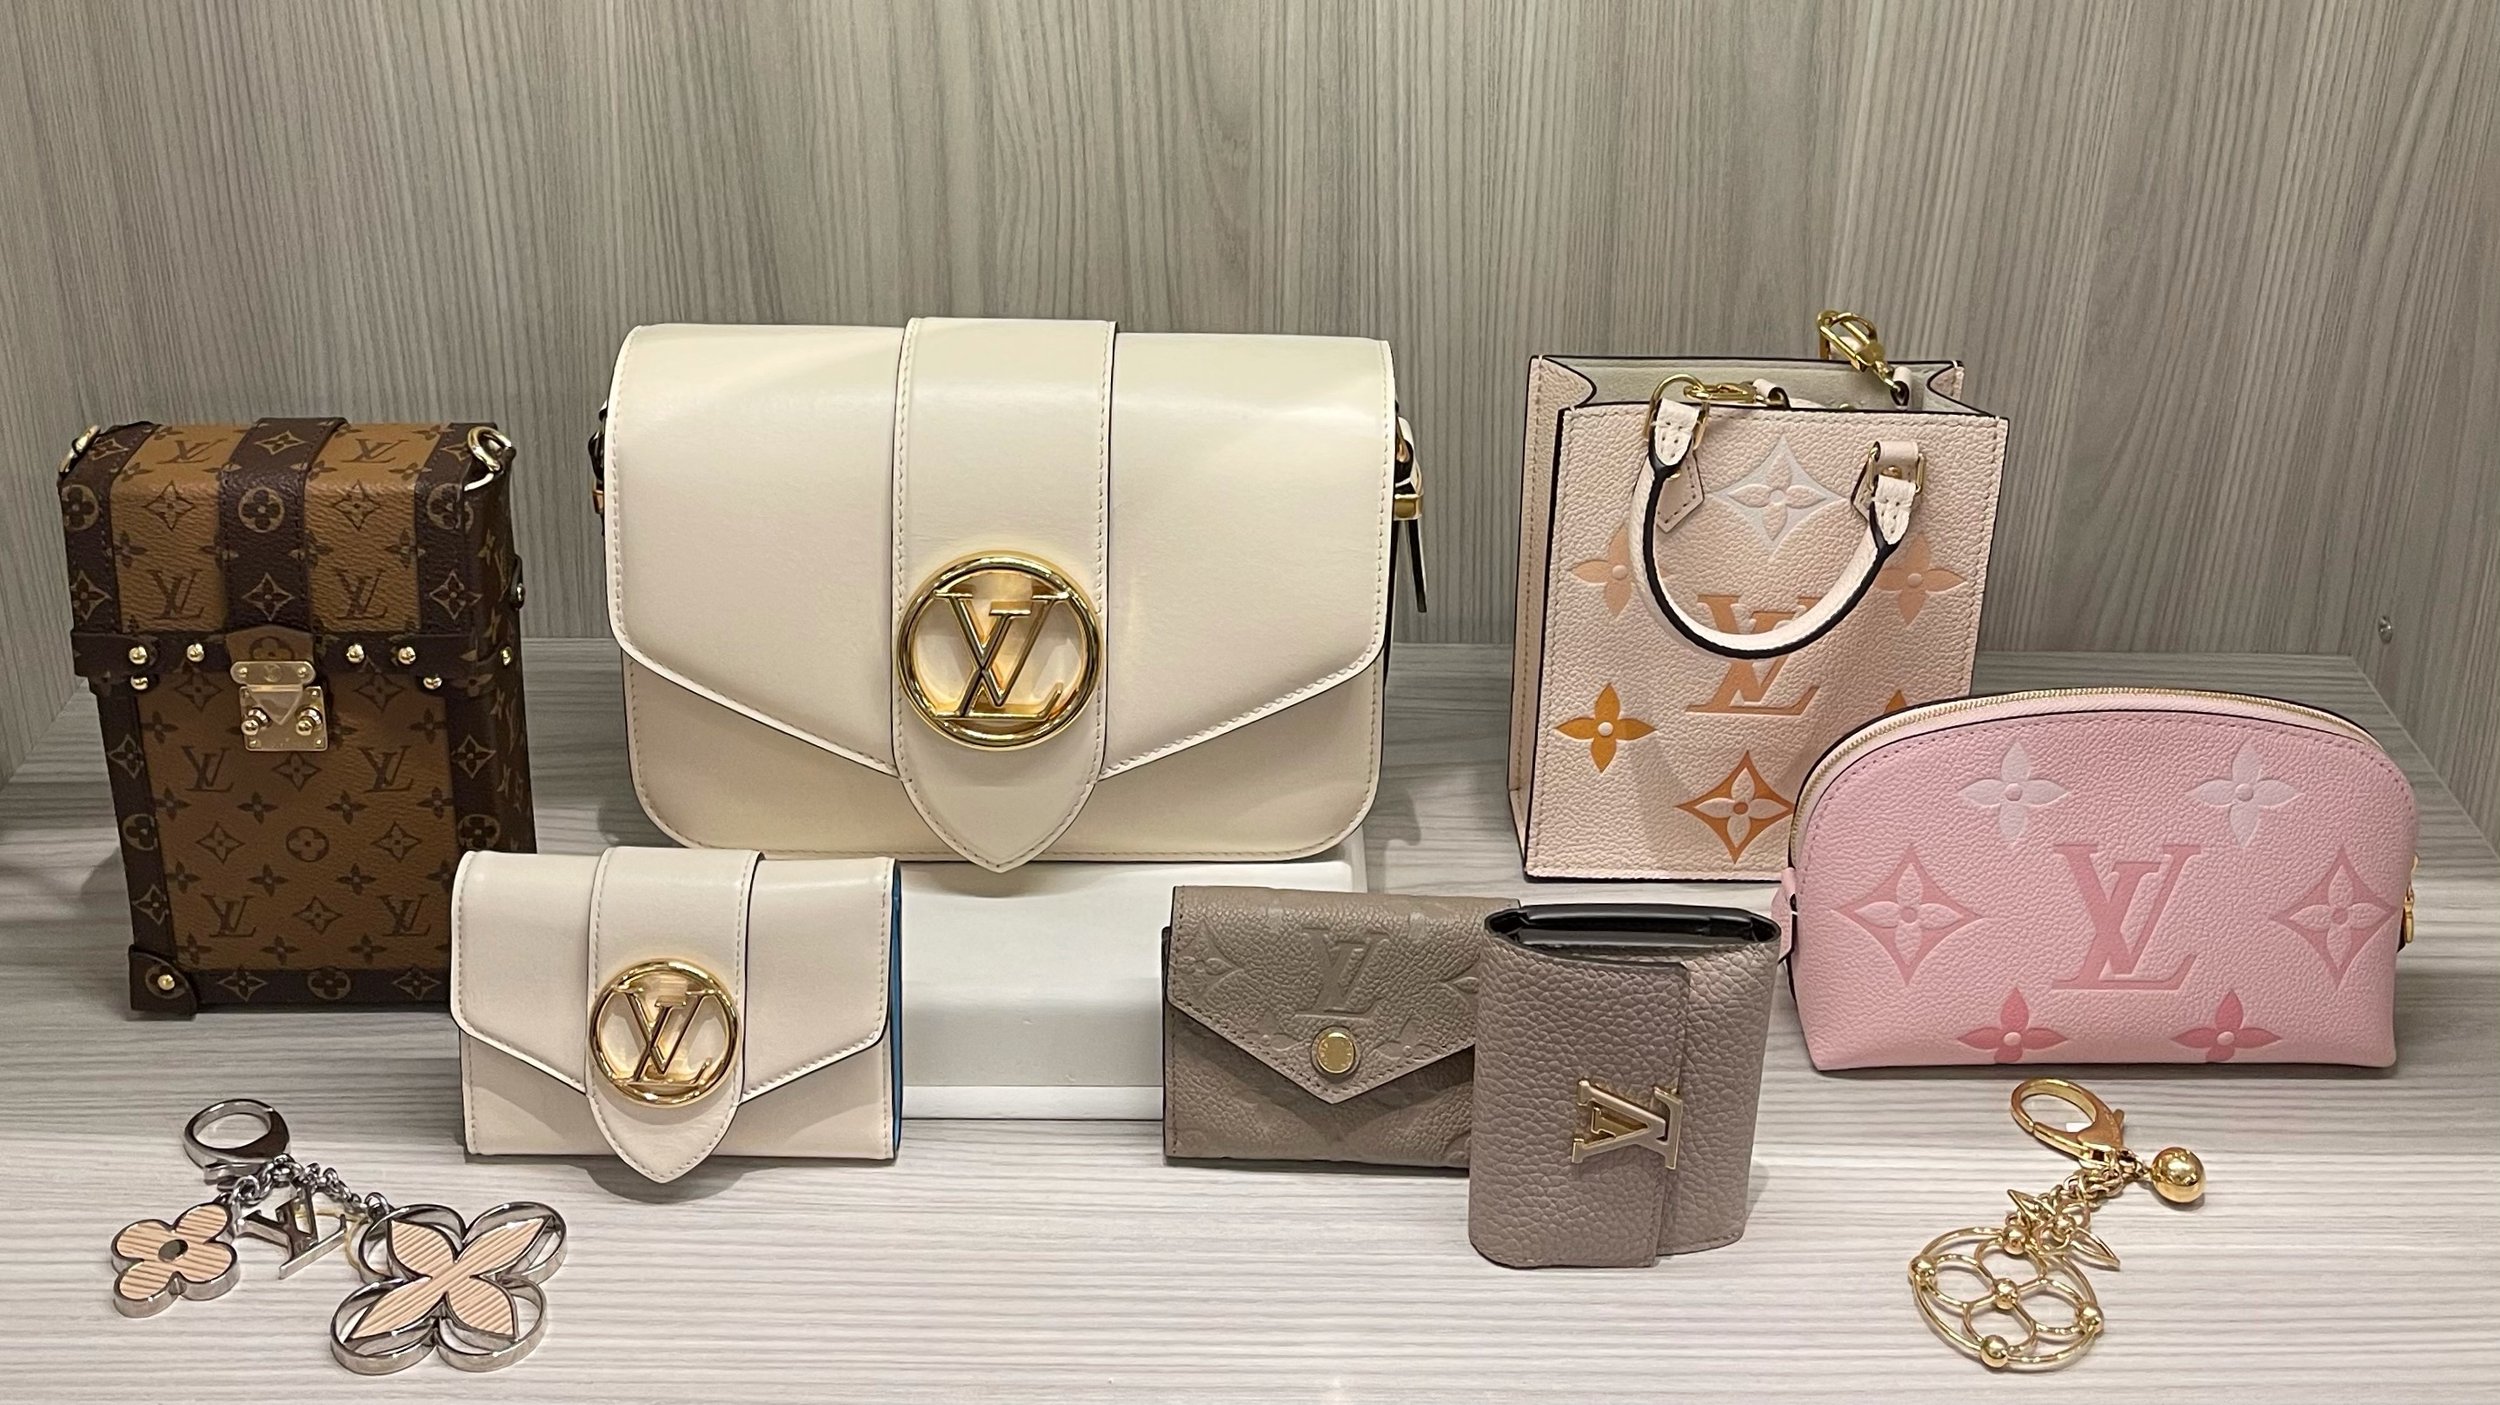 Authentic Designer Handbags As A Gift, Handbags and Purses